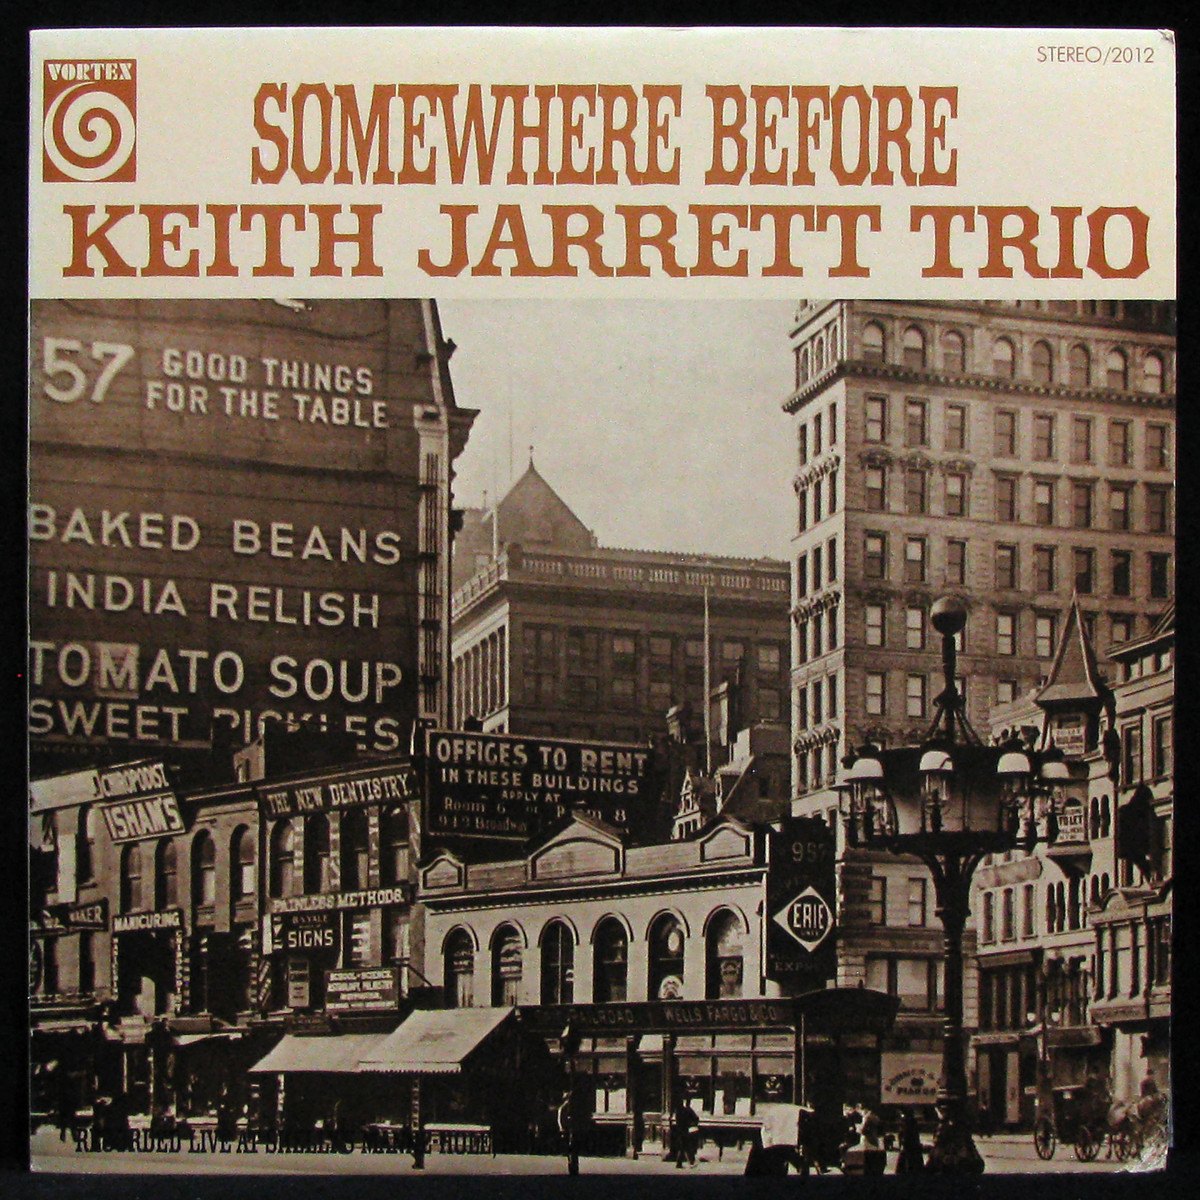 LP Keith Jarrett Trio — Somewhere Before фото